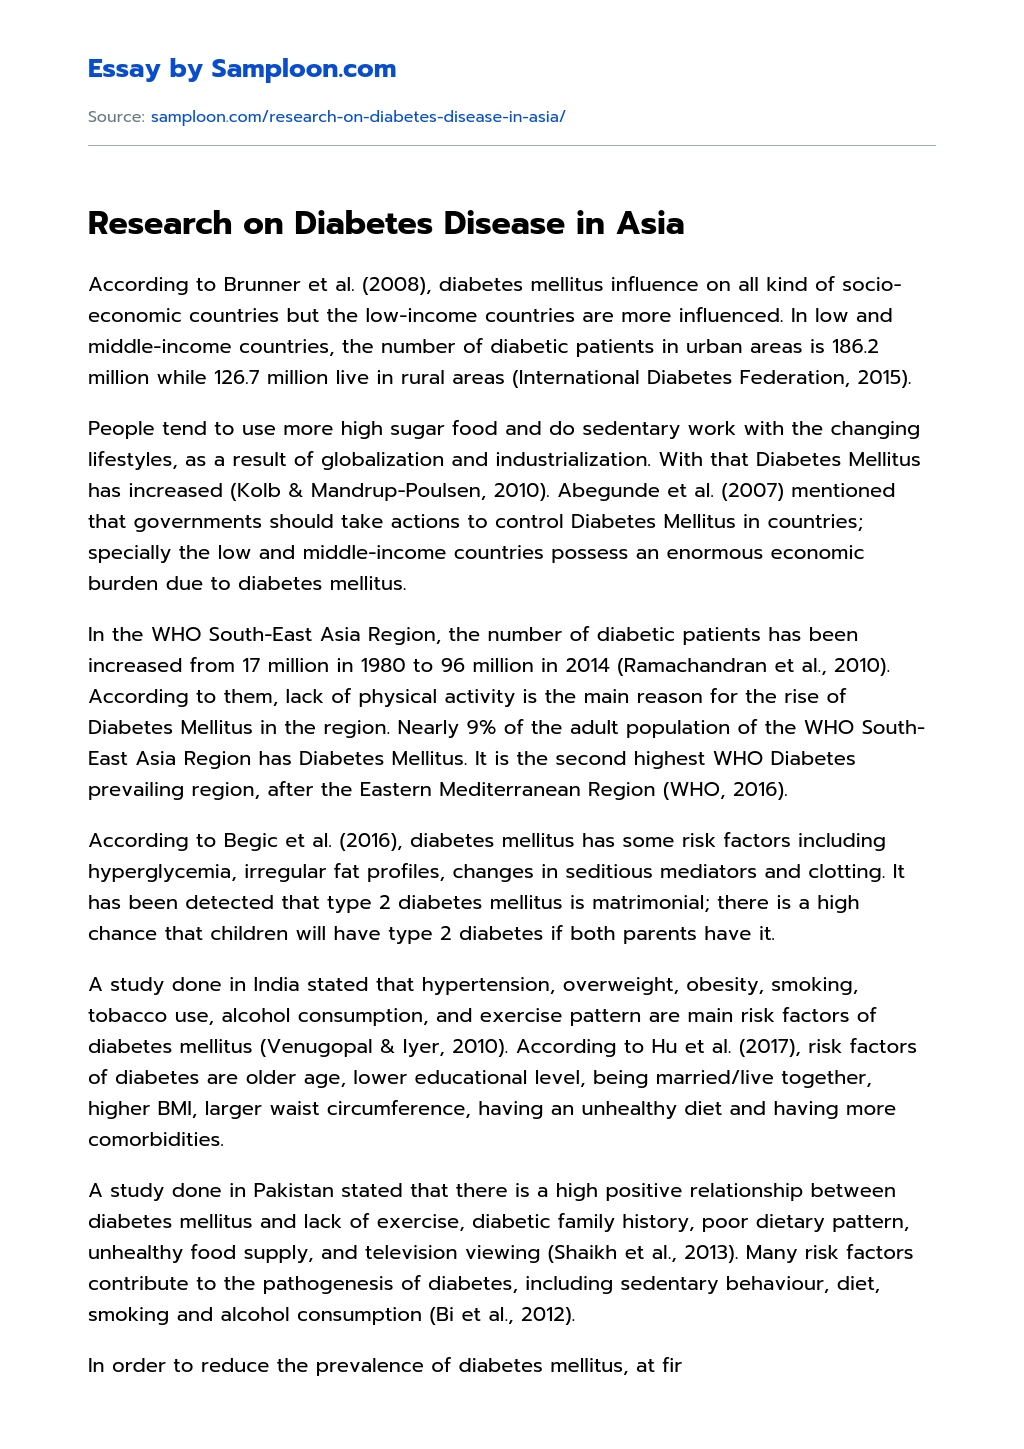 Research on Diabetes Disease in Asia essay